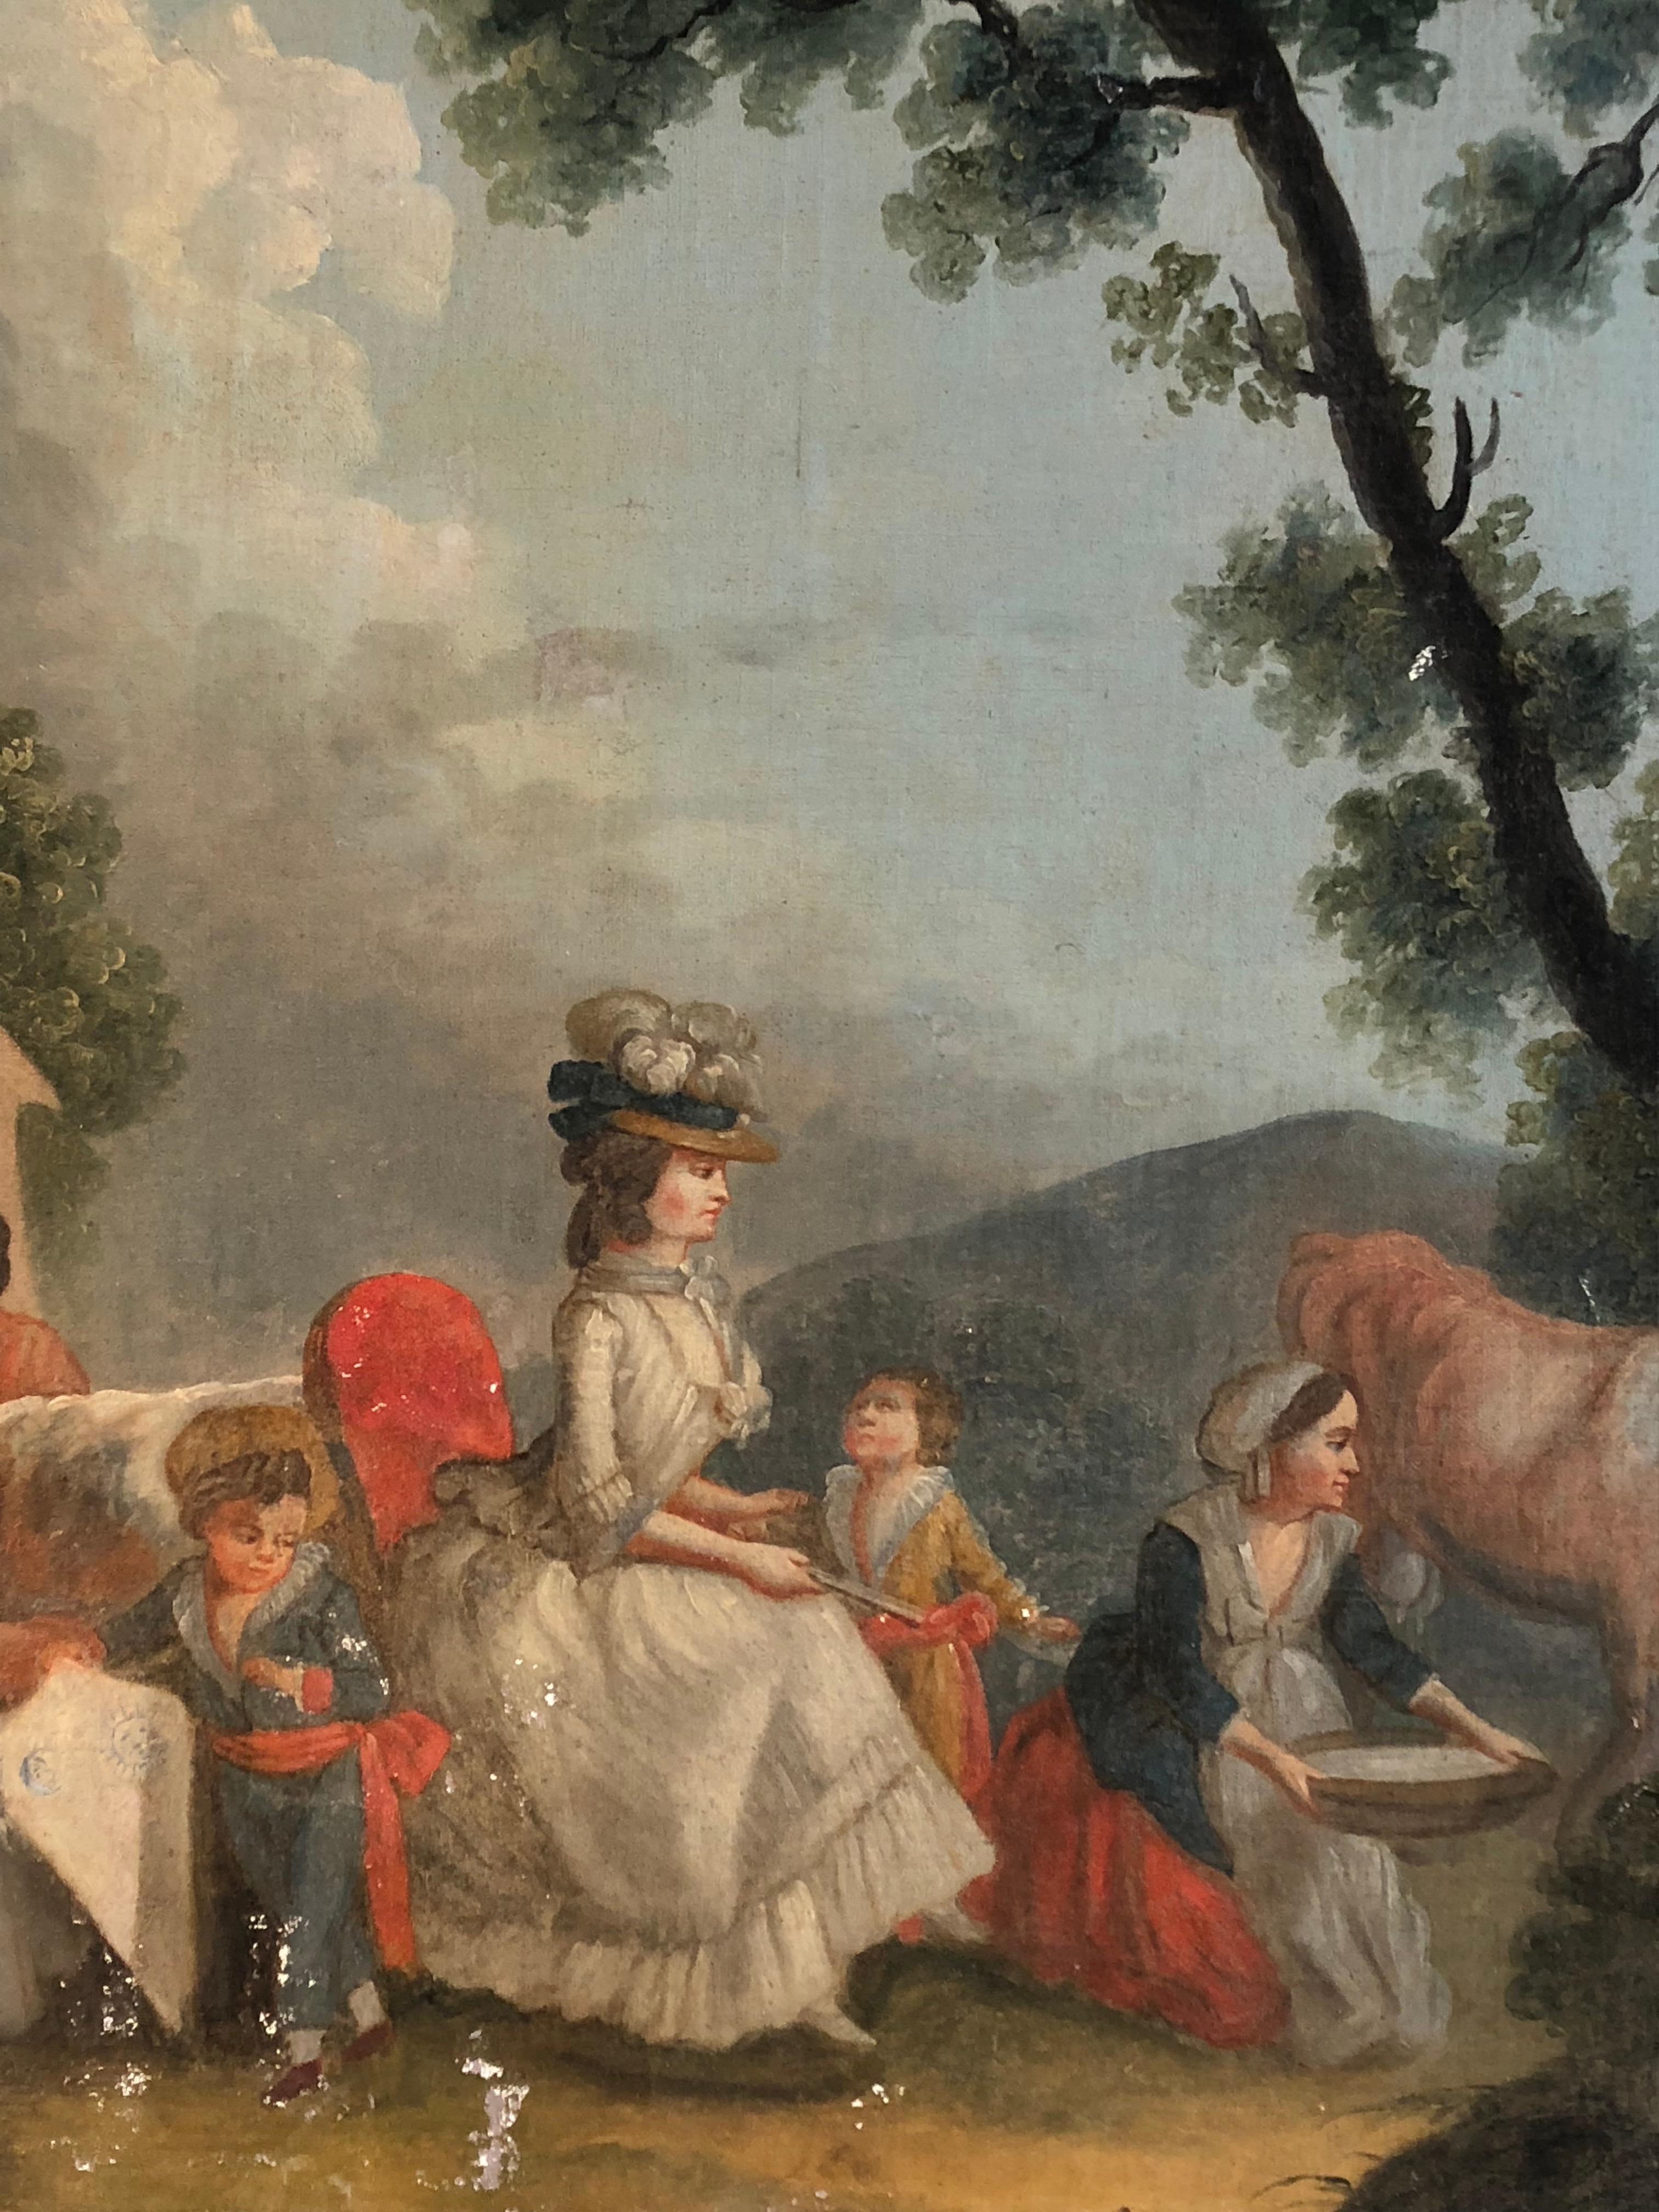 Canvas French Provincial Farm Scene, Marie Antoinette, 18th C.